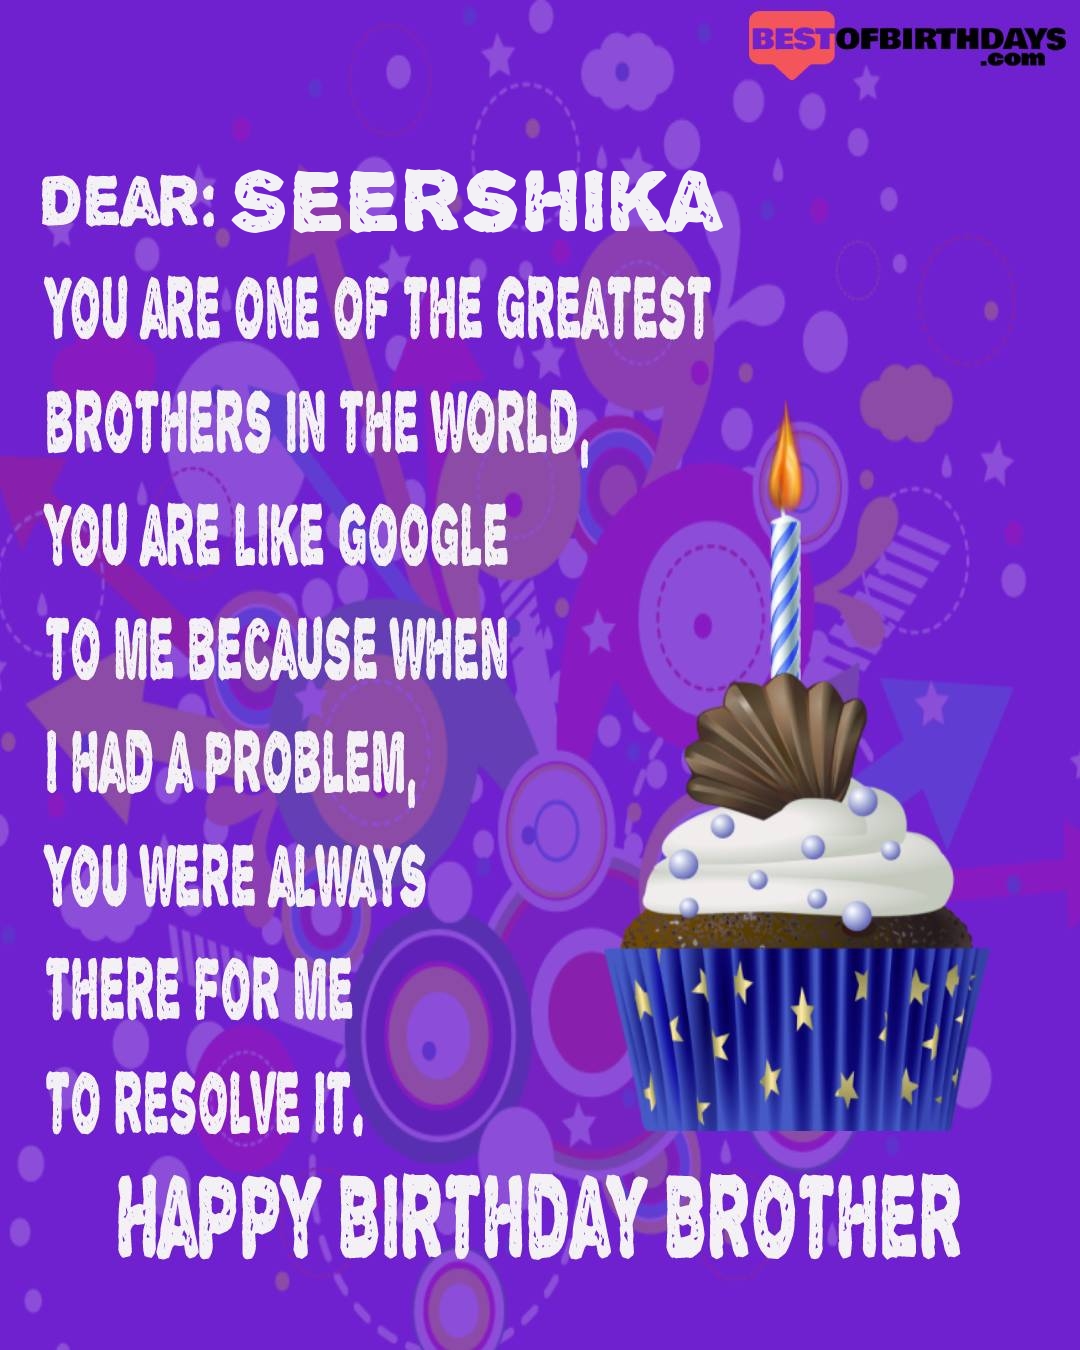 Happy birthday seershika bhai brother bro